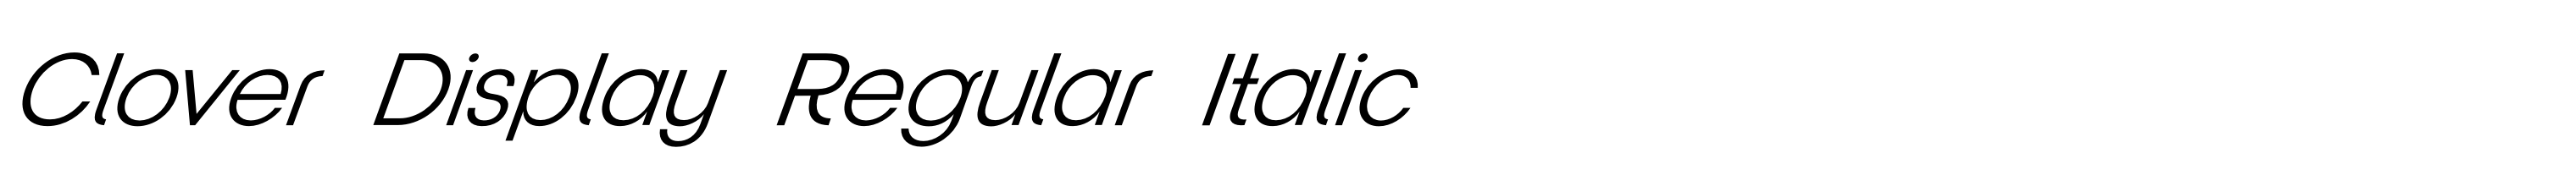 Clover Display Regular Italic